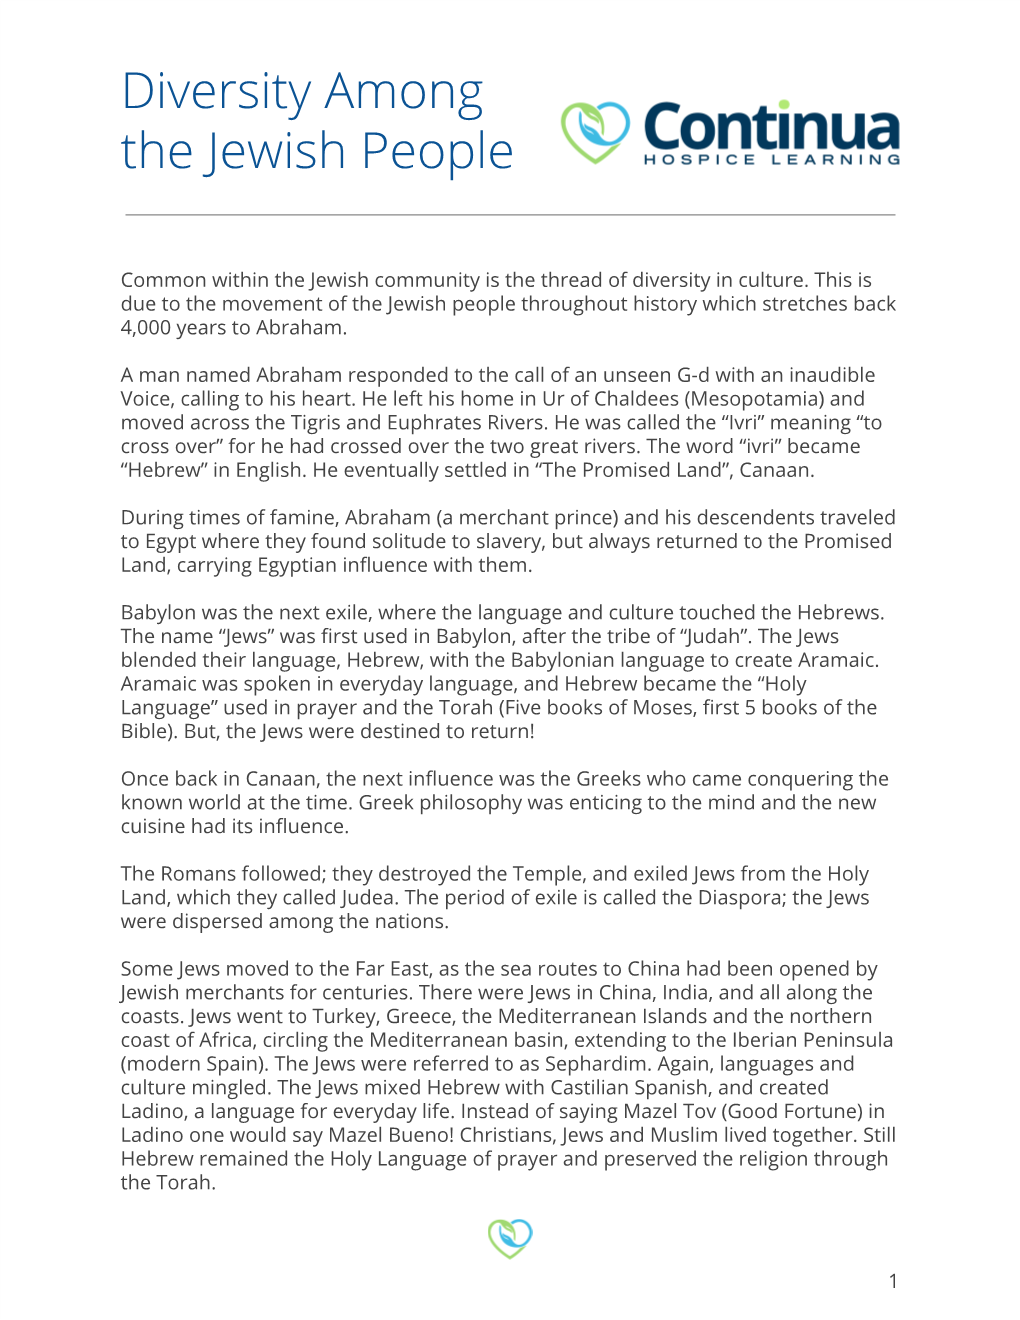 Diversity Among the Jewish People